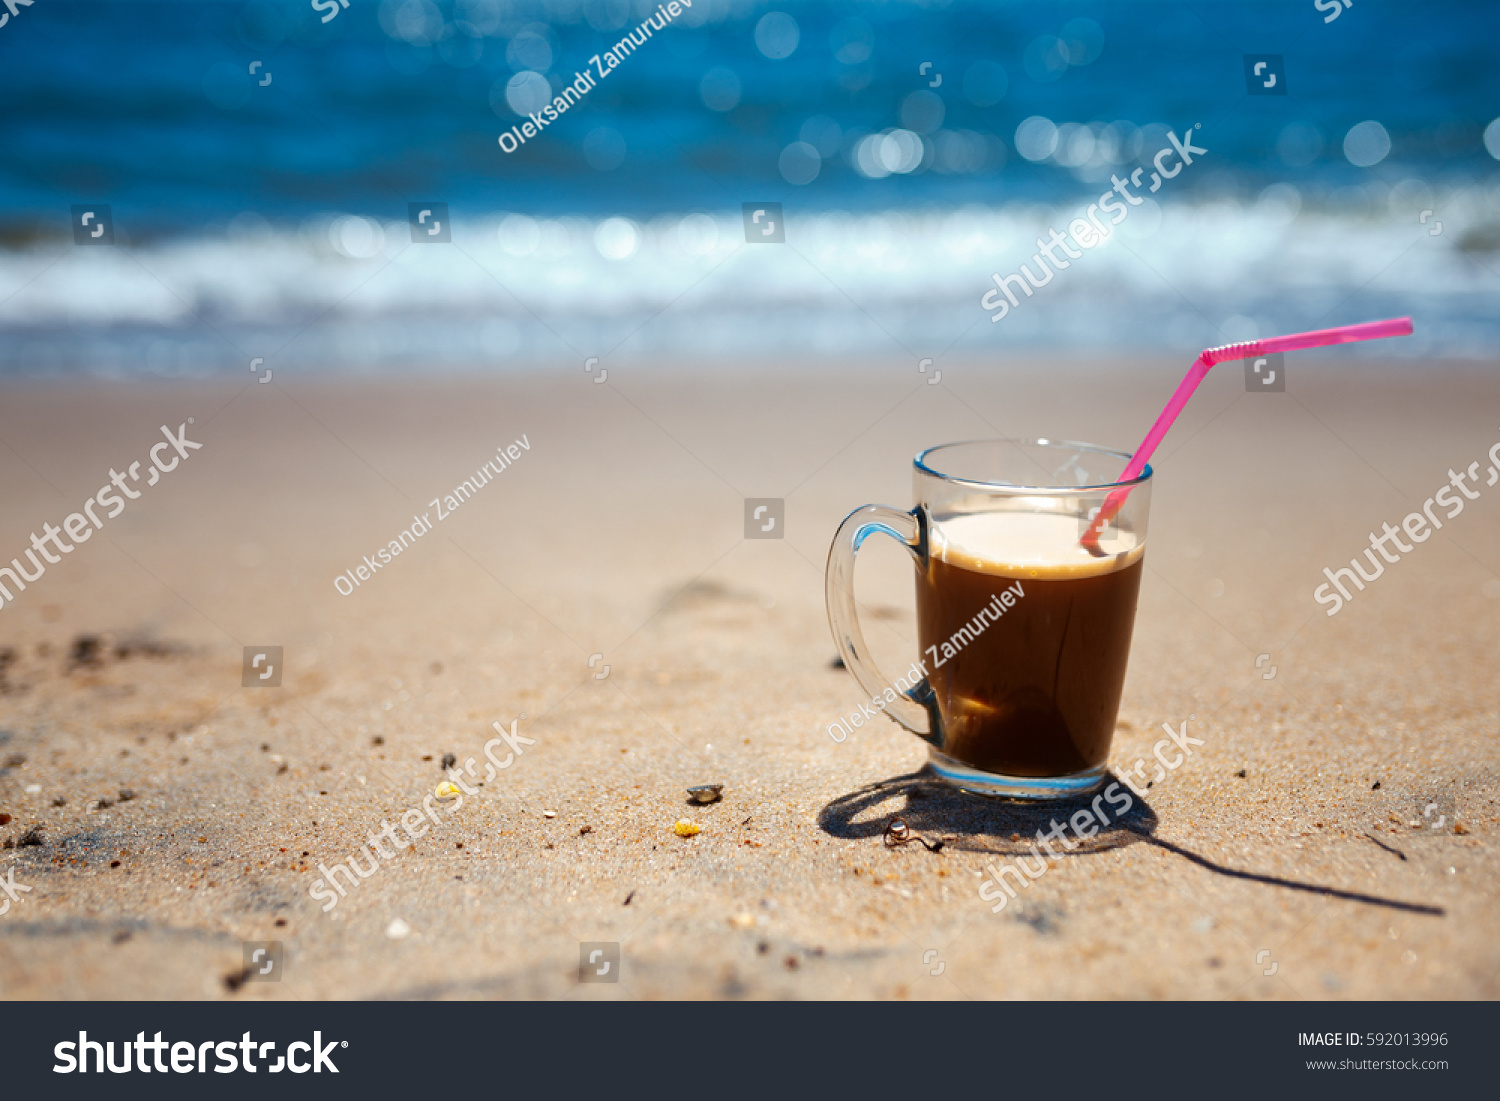 Iced Coffee Latte On Beach Ocean Stock Photo 592013996 - Shutterstock